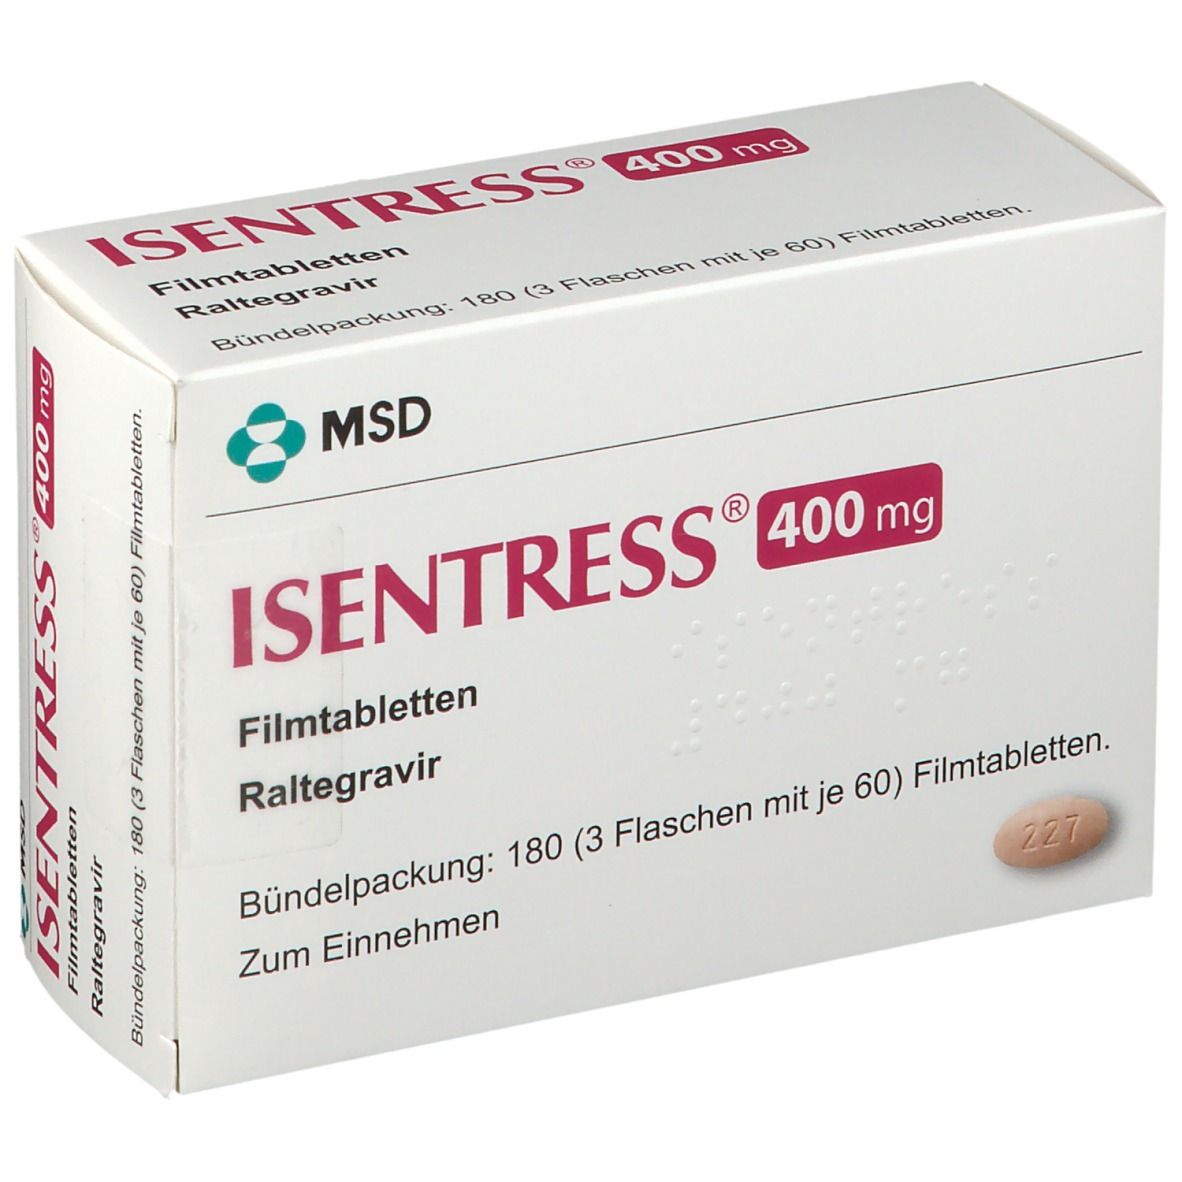 ISENTRESS® 400 mg